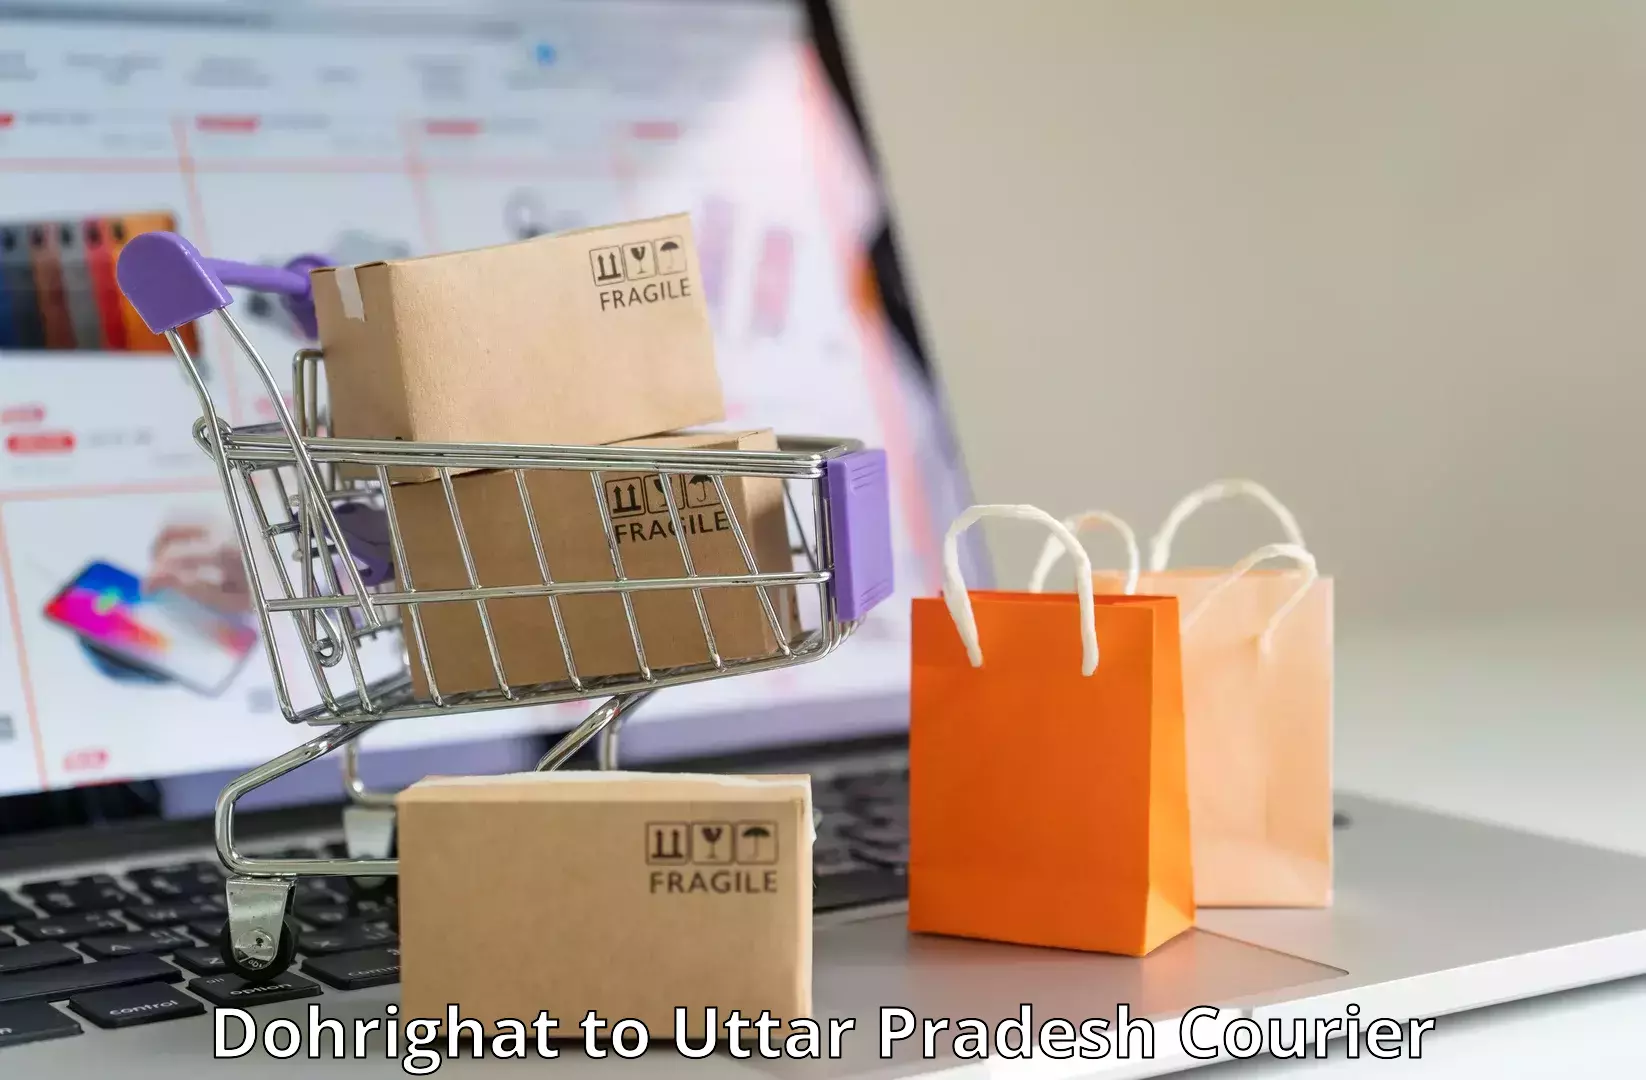 International parcel service Dohrighat to Uttar Pradesh